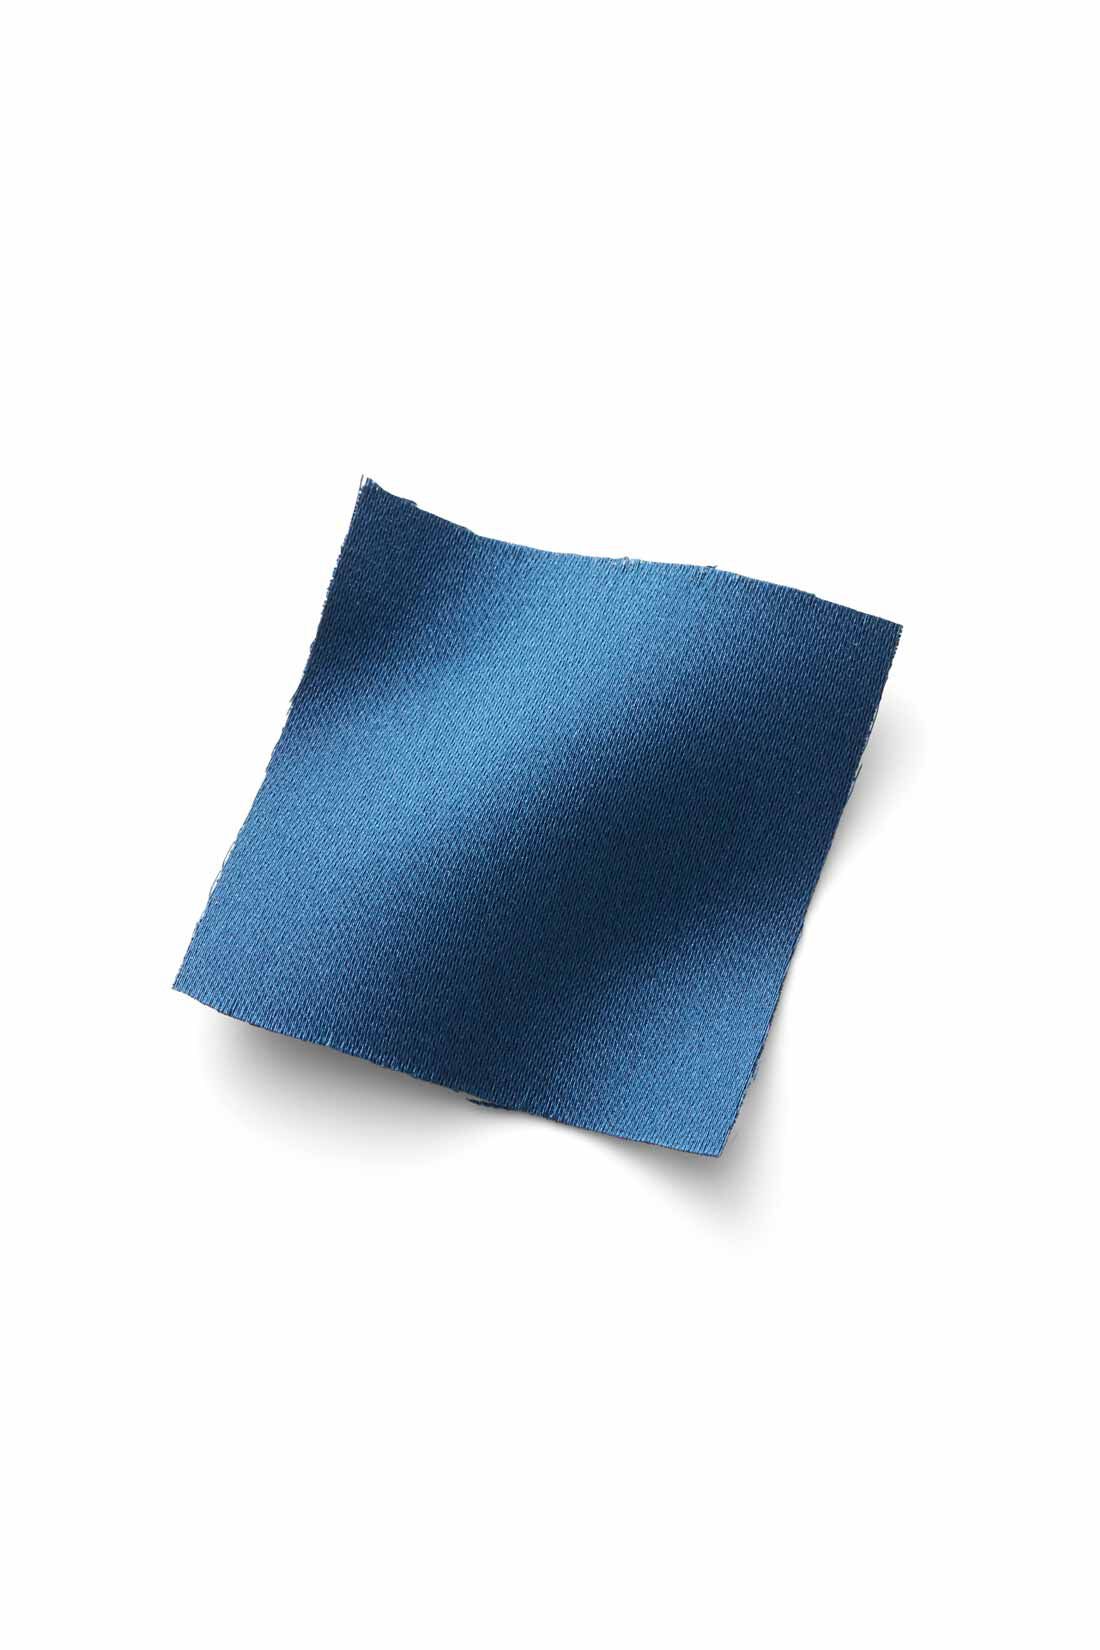 WEB限定お買い得商品|IEDIT[イディット]　サテンの光沢が美しいセミサーキュラースカート〈ディープブルー〉|からだのラインを拾いにくい厚手のサテン素材を厳選。